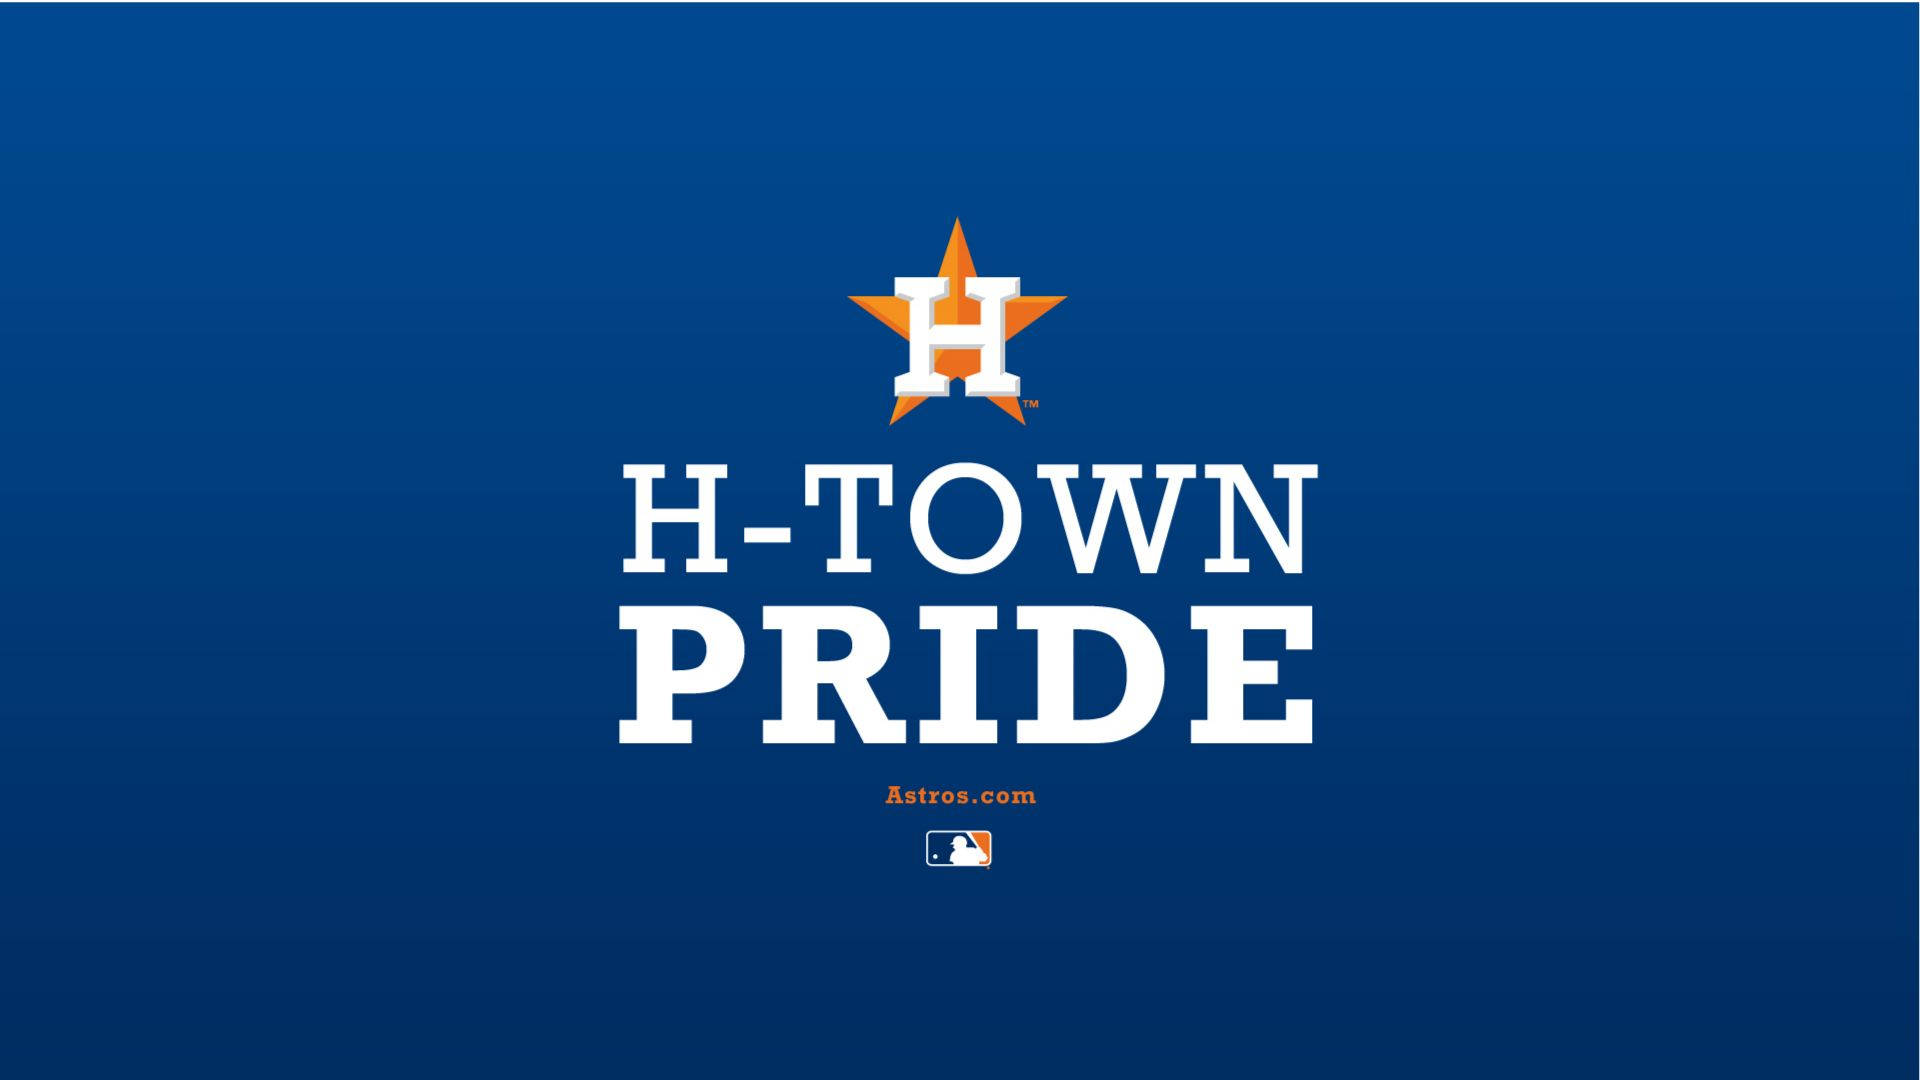 Houston Astros H-town Pride Background